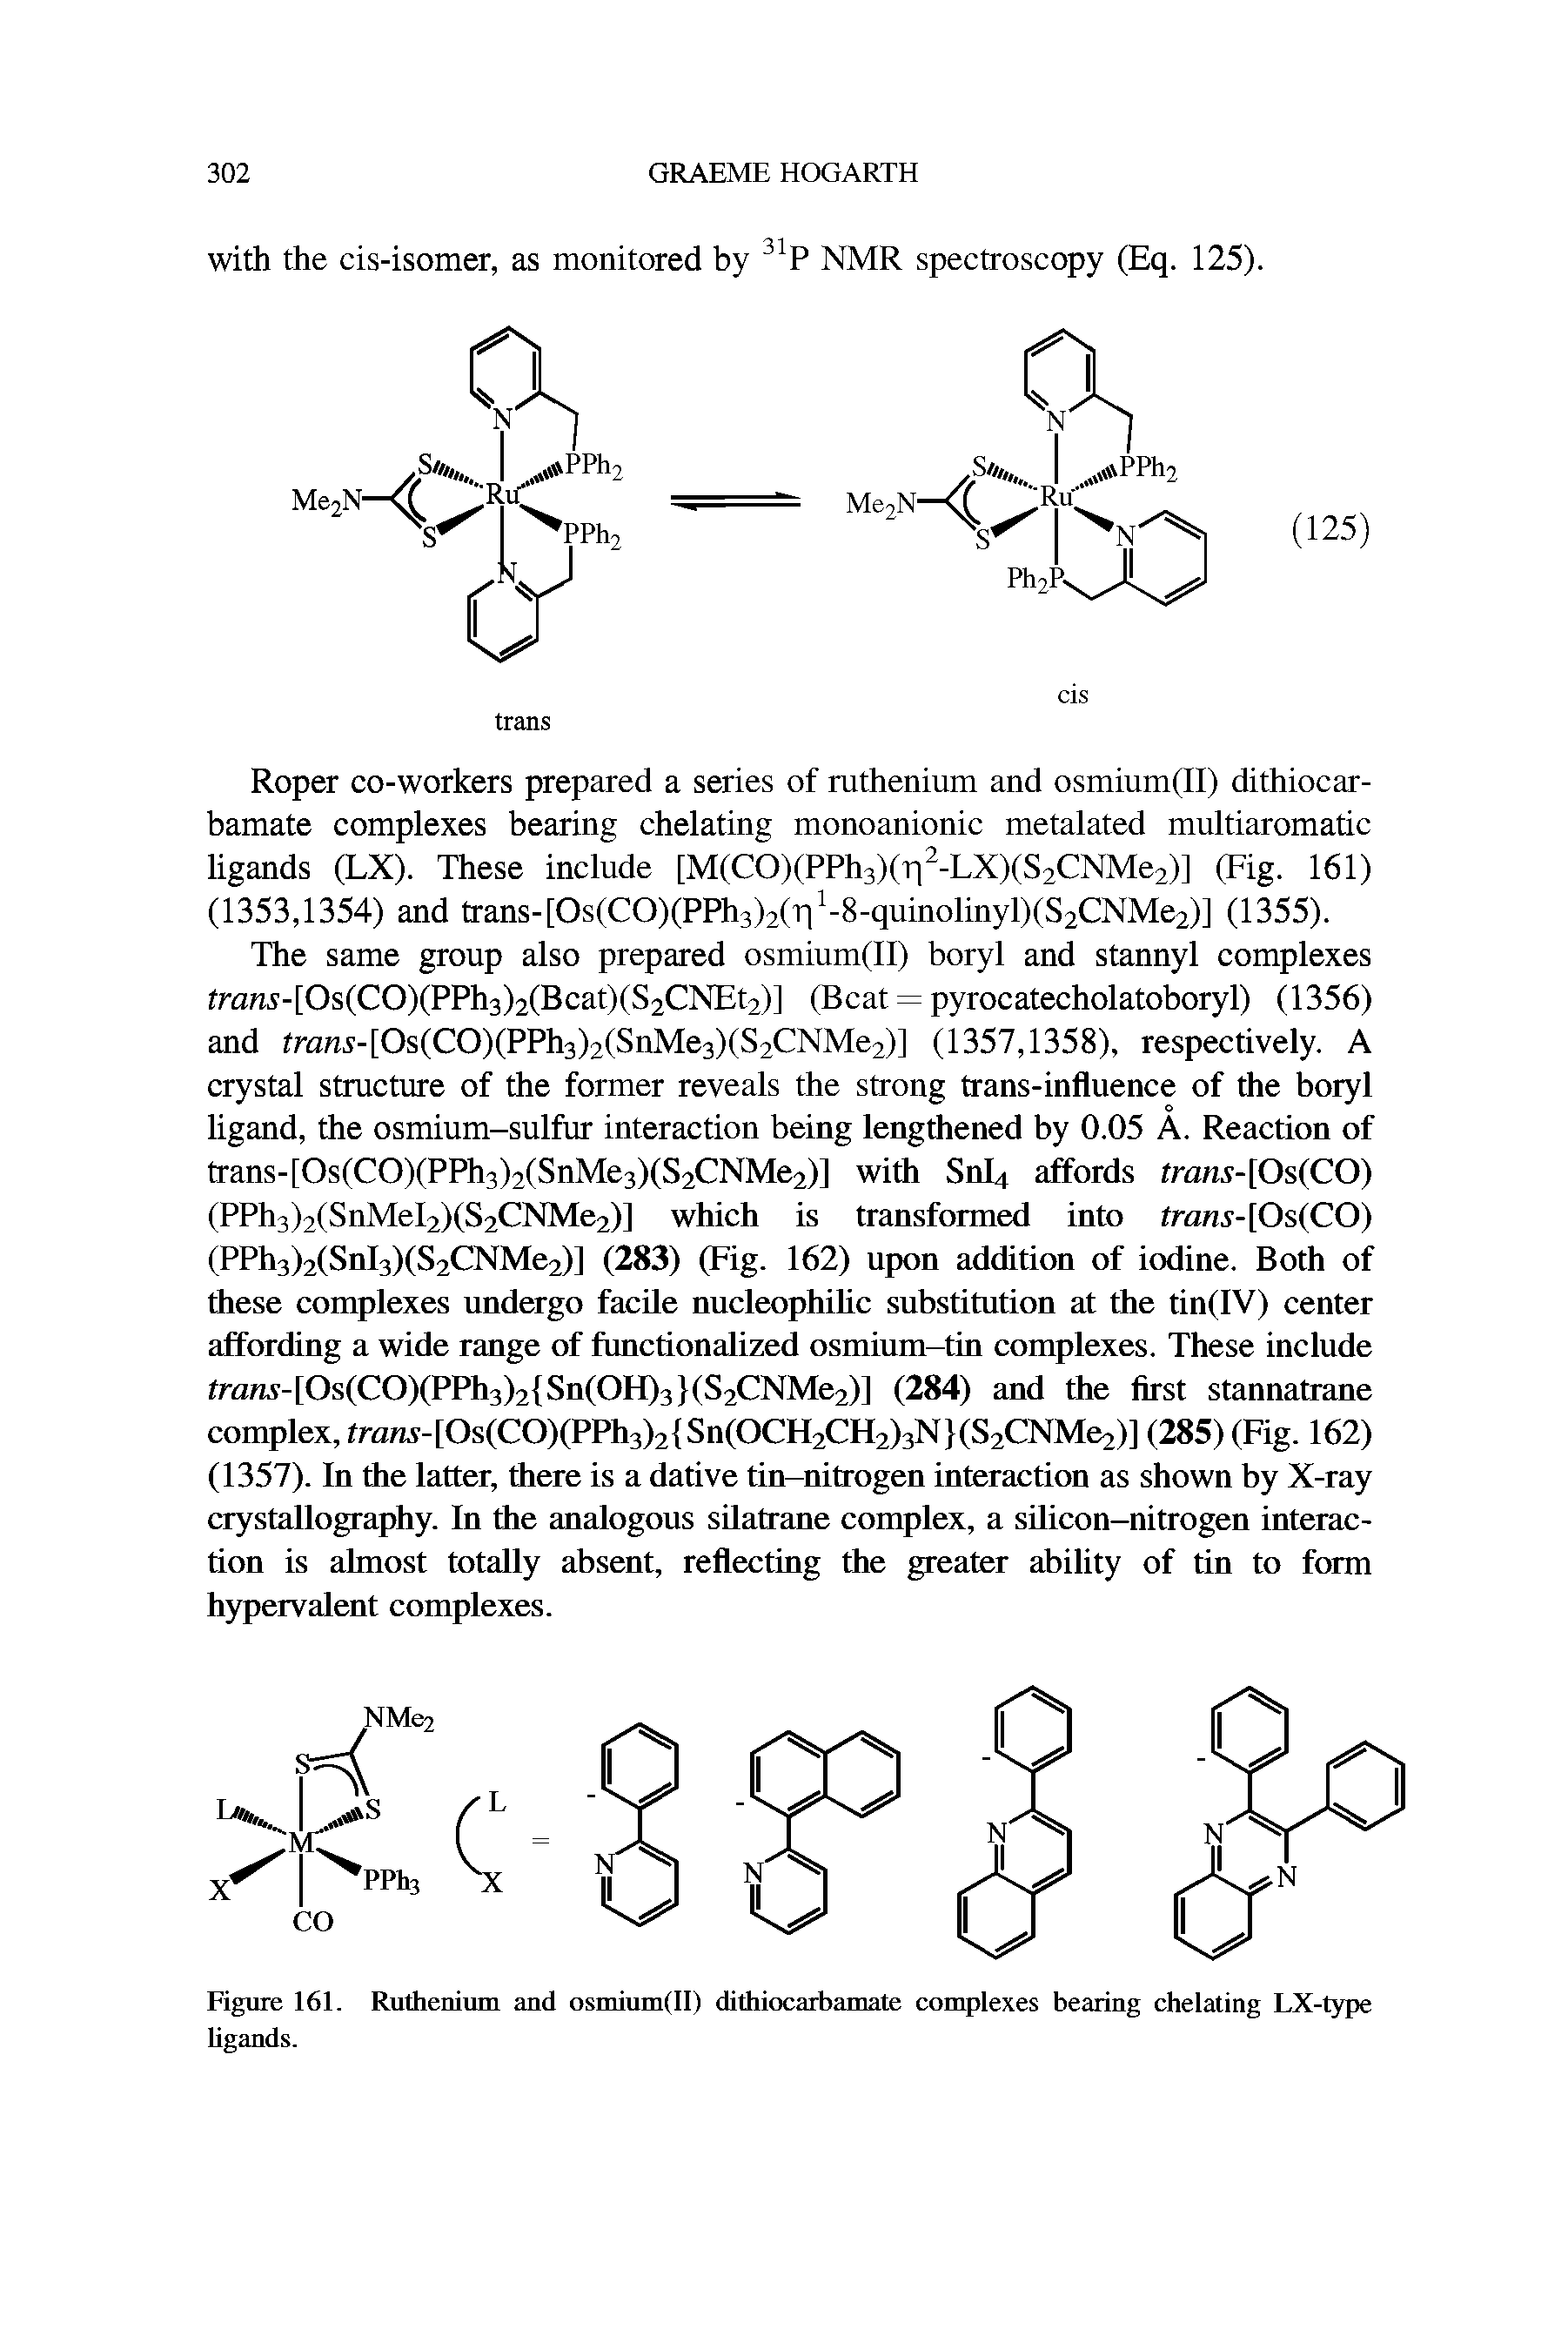 Figure 161. Ruthenium and osmium(II) dithiocarbamate complexes bearing chelating LX-type ligands.